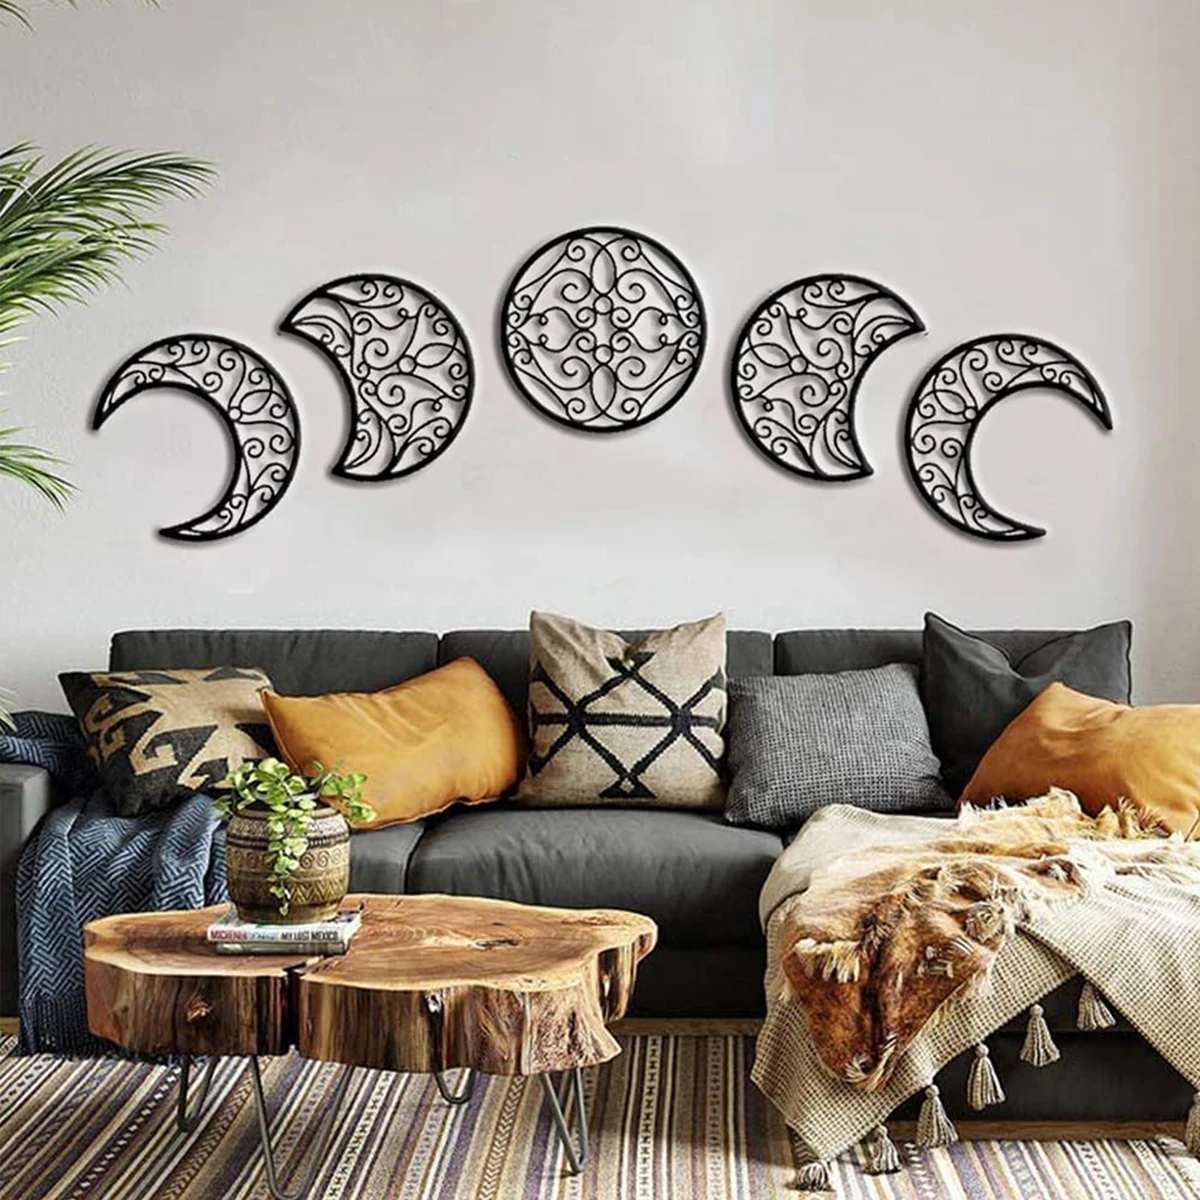 

5/1pcs 3D Wooden Moon Phases Wall Decorative Natural Design Moon Cycle Variation Decorative Creative Bohemian Wall-mounted Decor